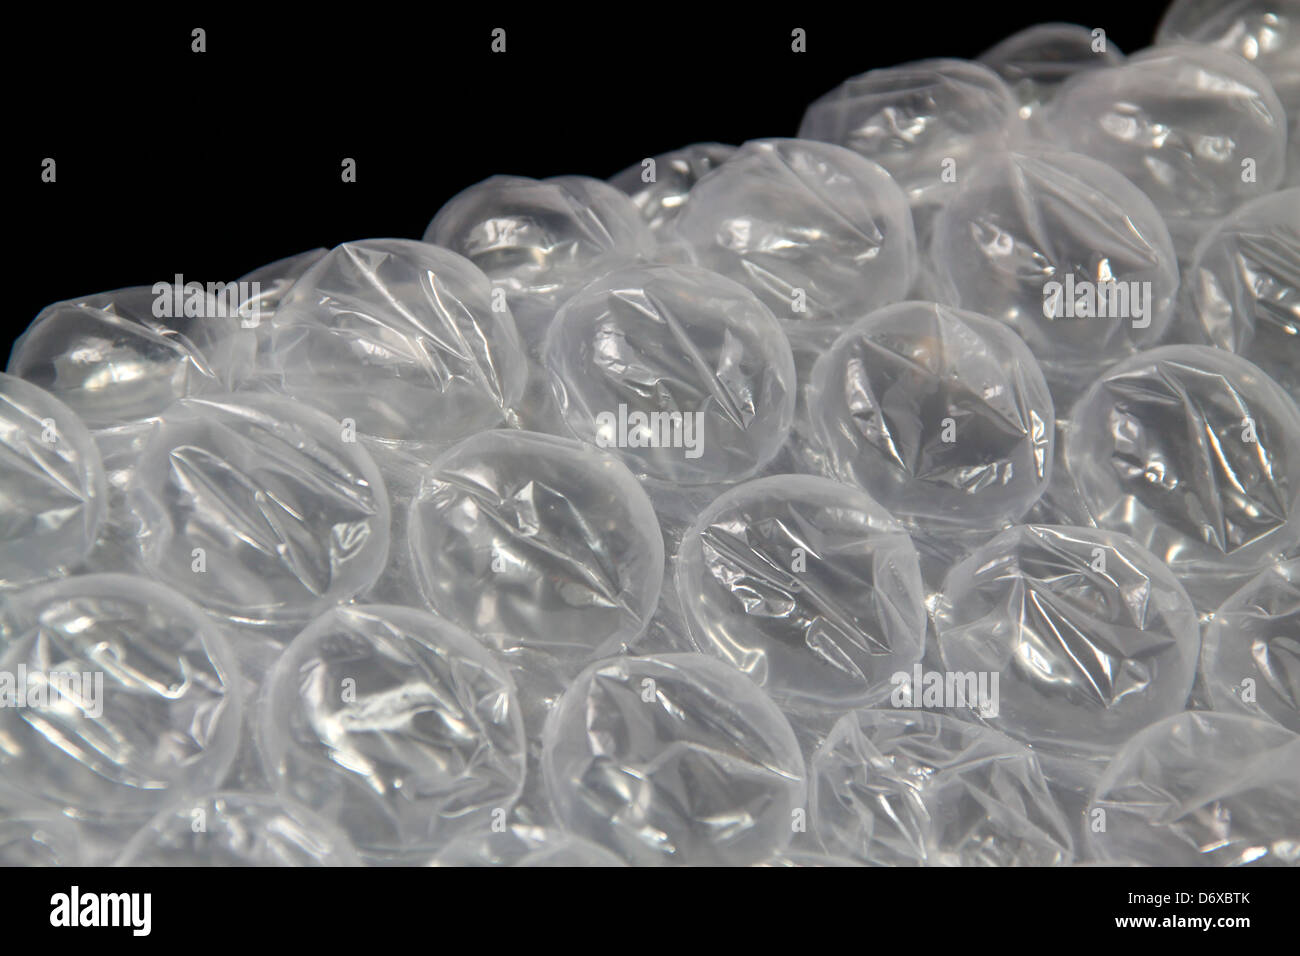 Plastic bubble wrap protective material Stock Photo: 55899107 - Alamy